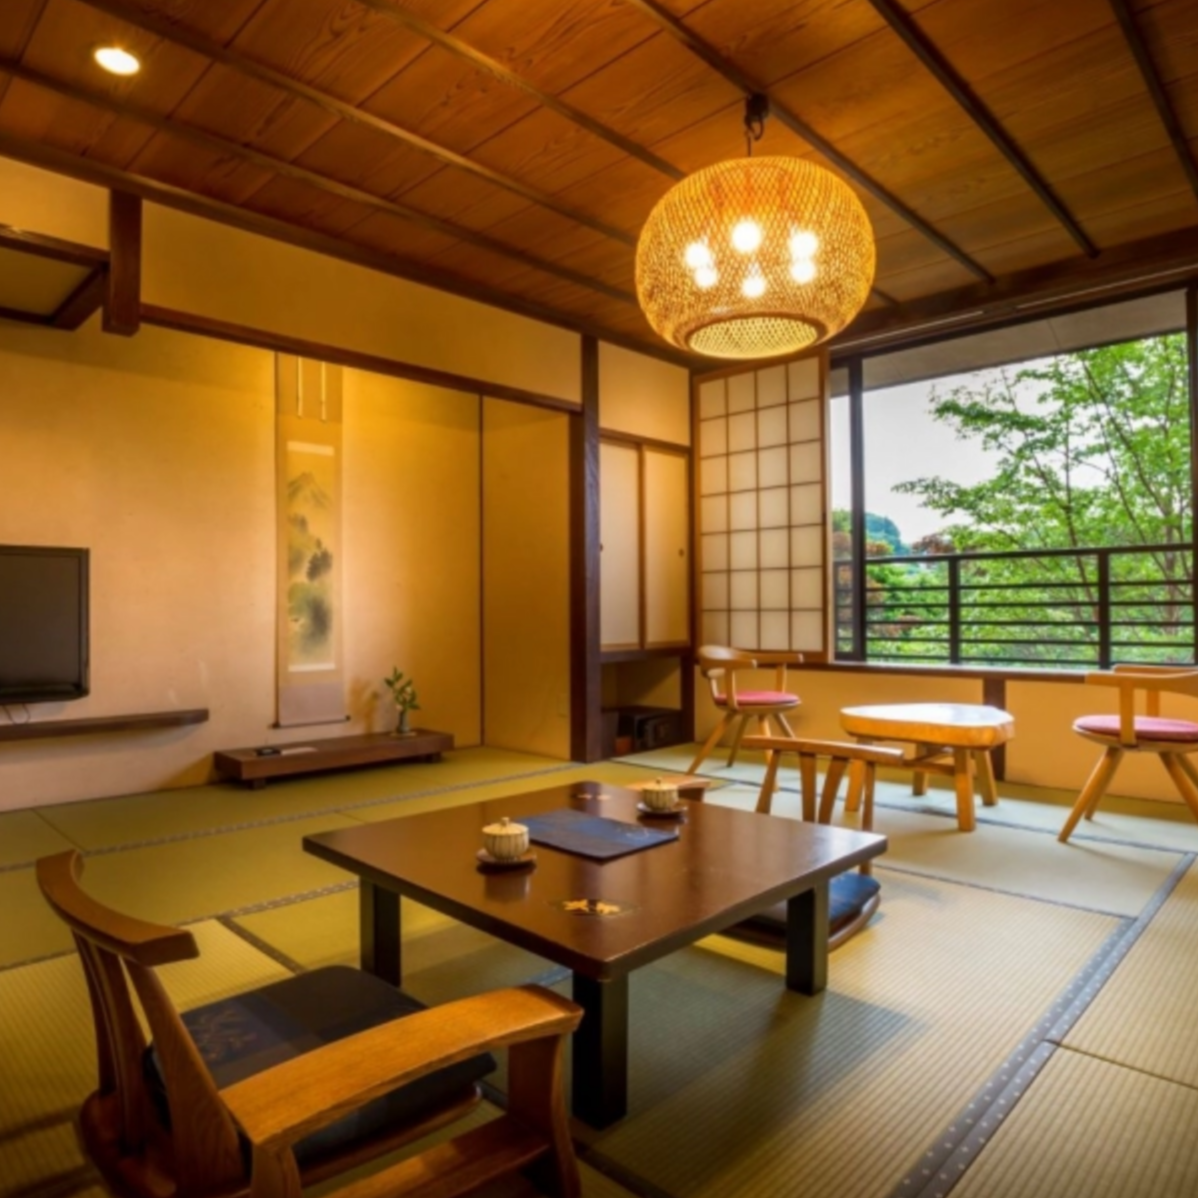 Ichii Standard Japanese Room with Futon